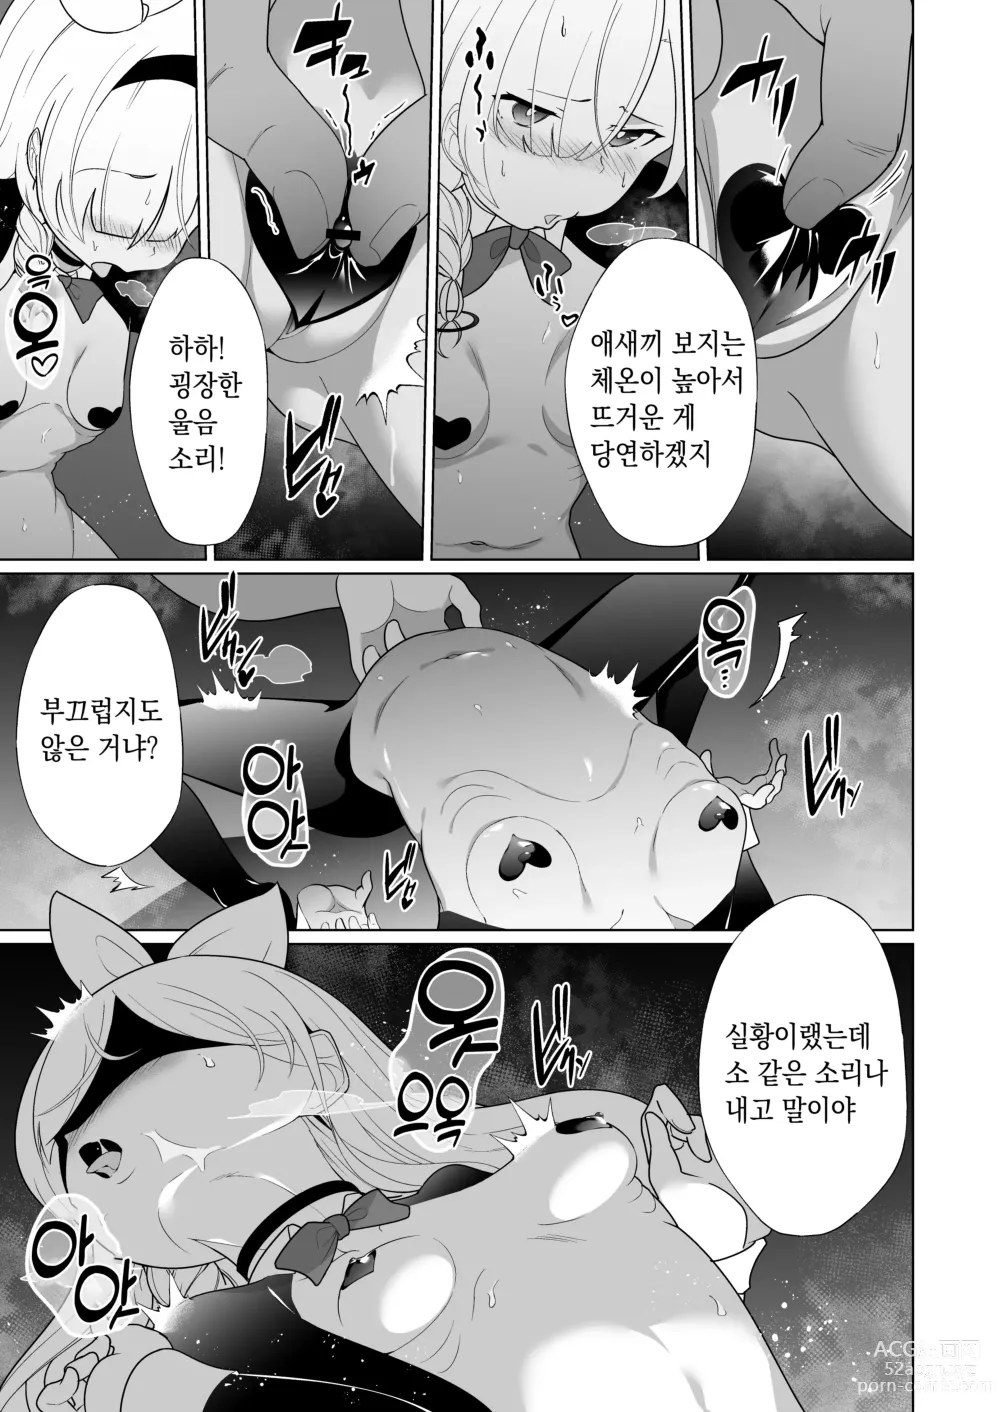 Page 24 of doujinshi 싫어하는 프라나가 기꺼이 봉사하는 이야기